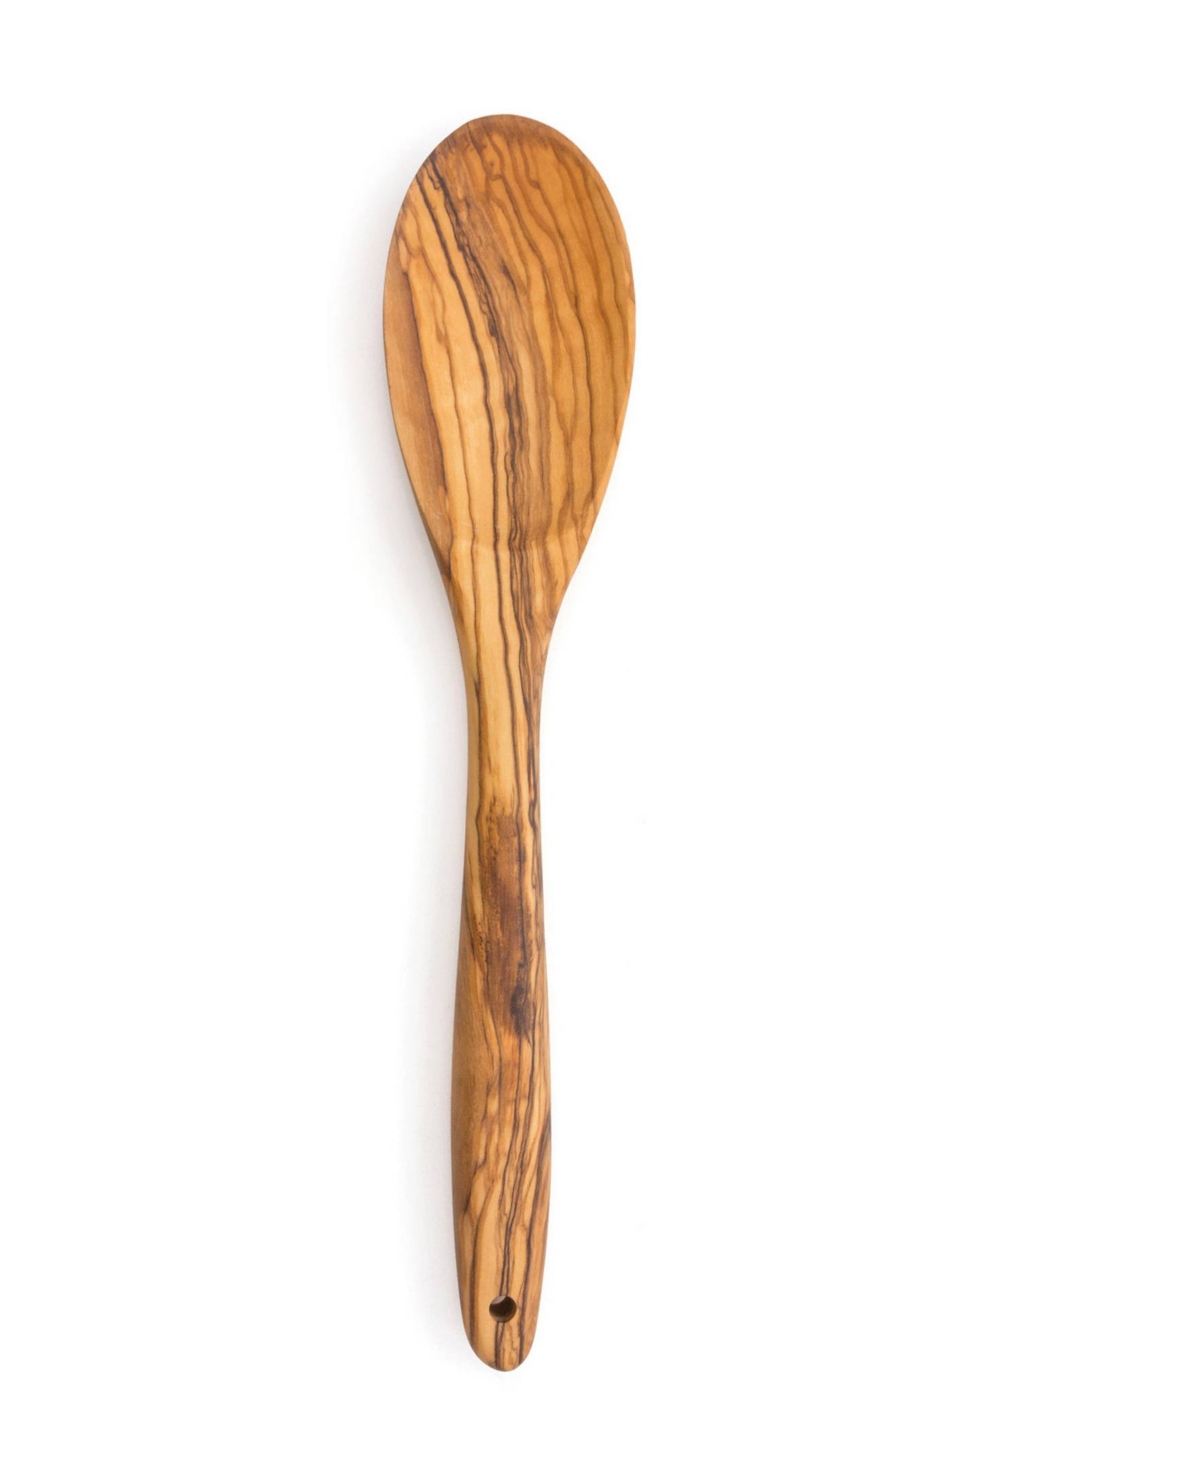 Rsvp International Olive Wood 12x2" Spoon 12x2x1" In Brown